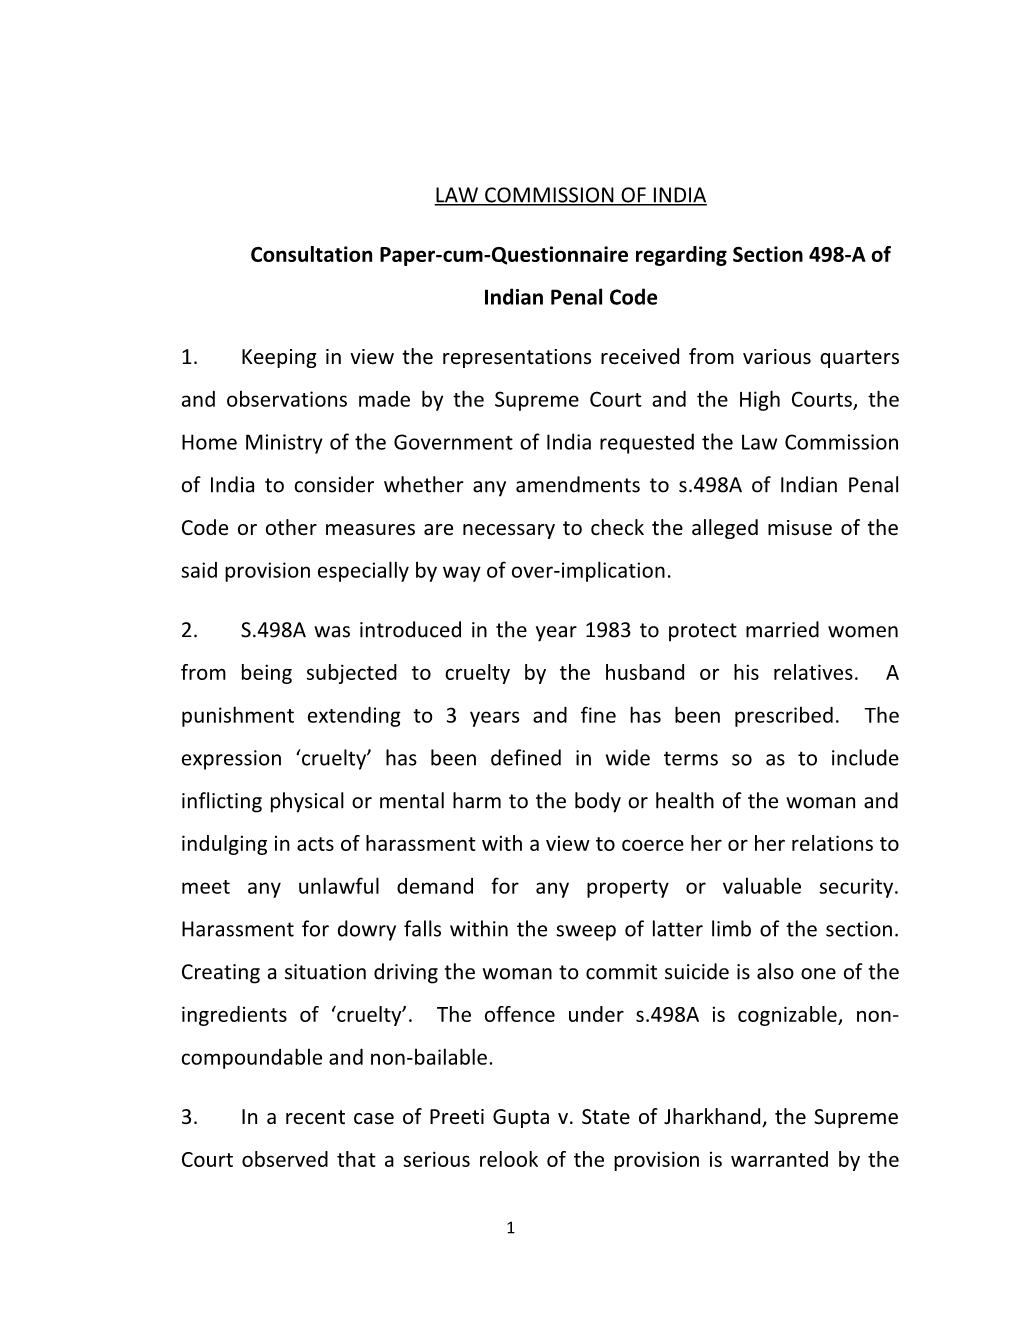 Consultation Paper-Cum-Questionnaire Regarding Section 498-A of Indian Penal Code